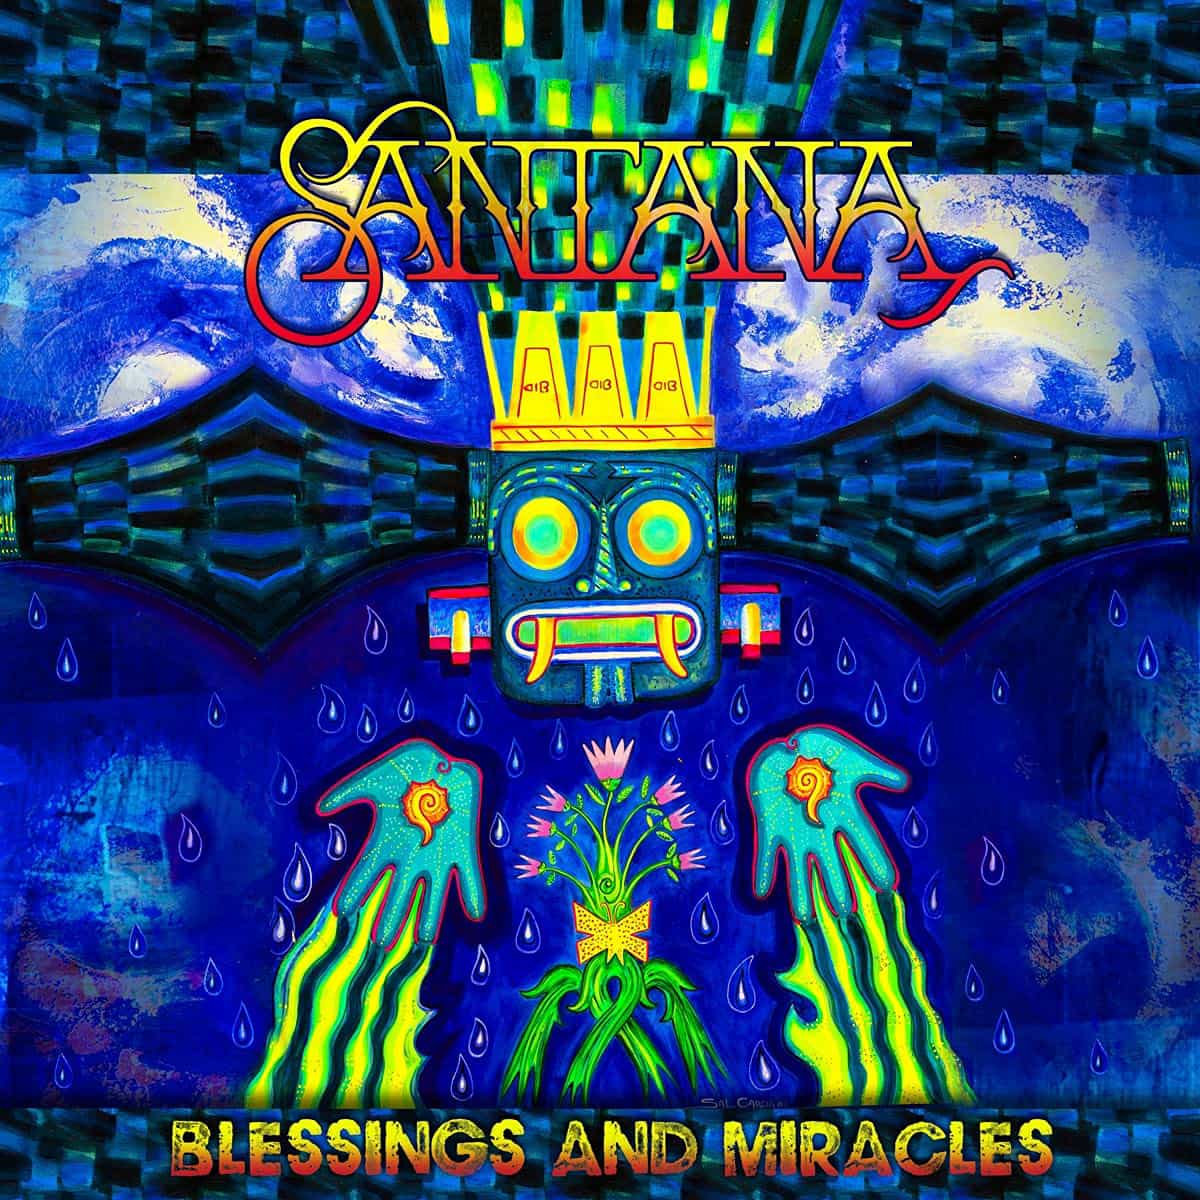 Carlos Santana 2021 - Neues Album "Blessings and Miracles"